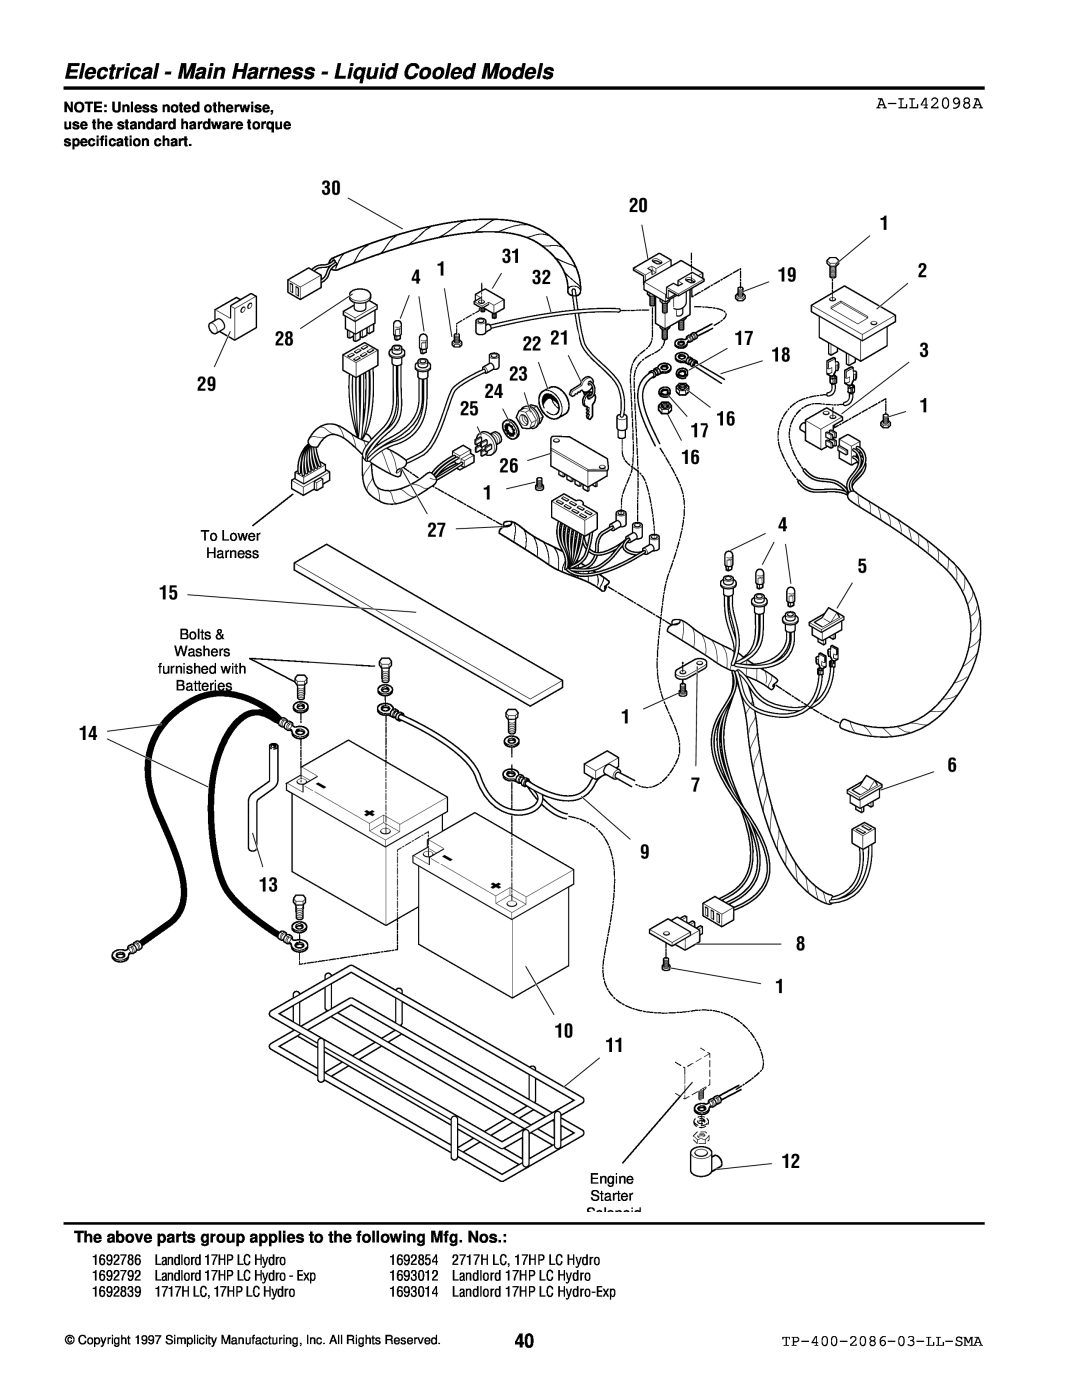 Simplicity 2700, 1700 manual Electrical - Main Harness - Liquid Cooled Models, Ci Ck Ci Ch 